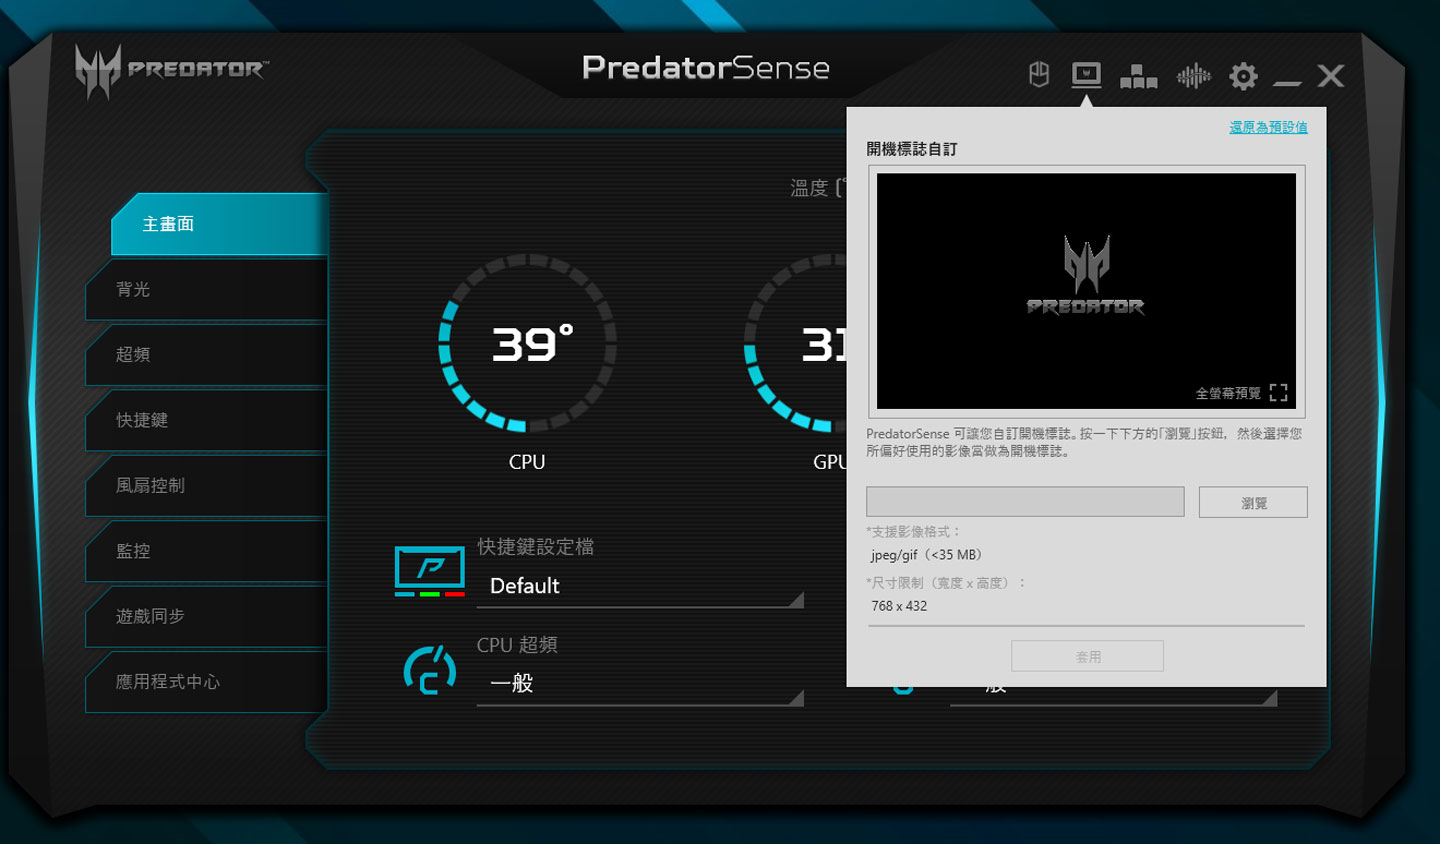 PredatorSense 的主介面右上角也有其他設定功能，像是可以自訂開機畫面的 LOGO。